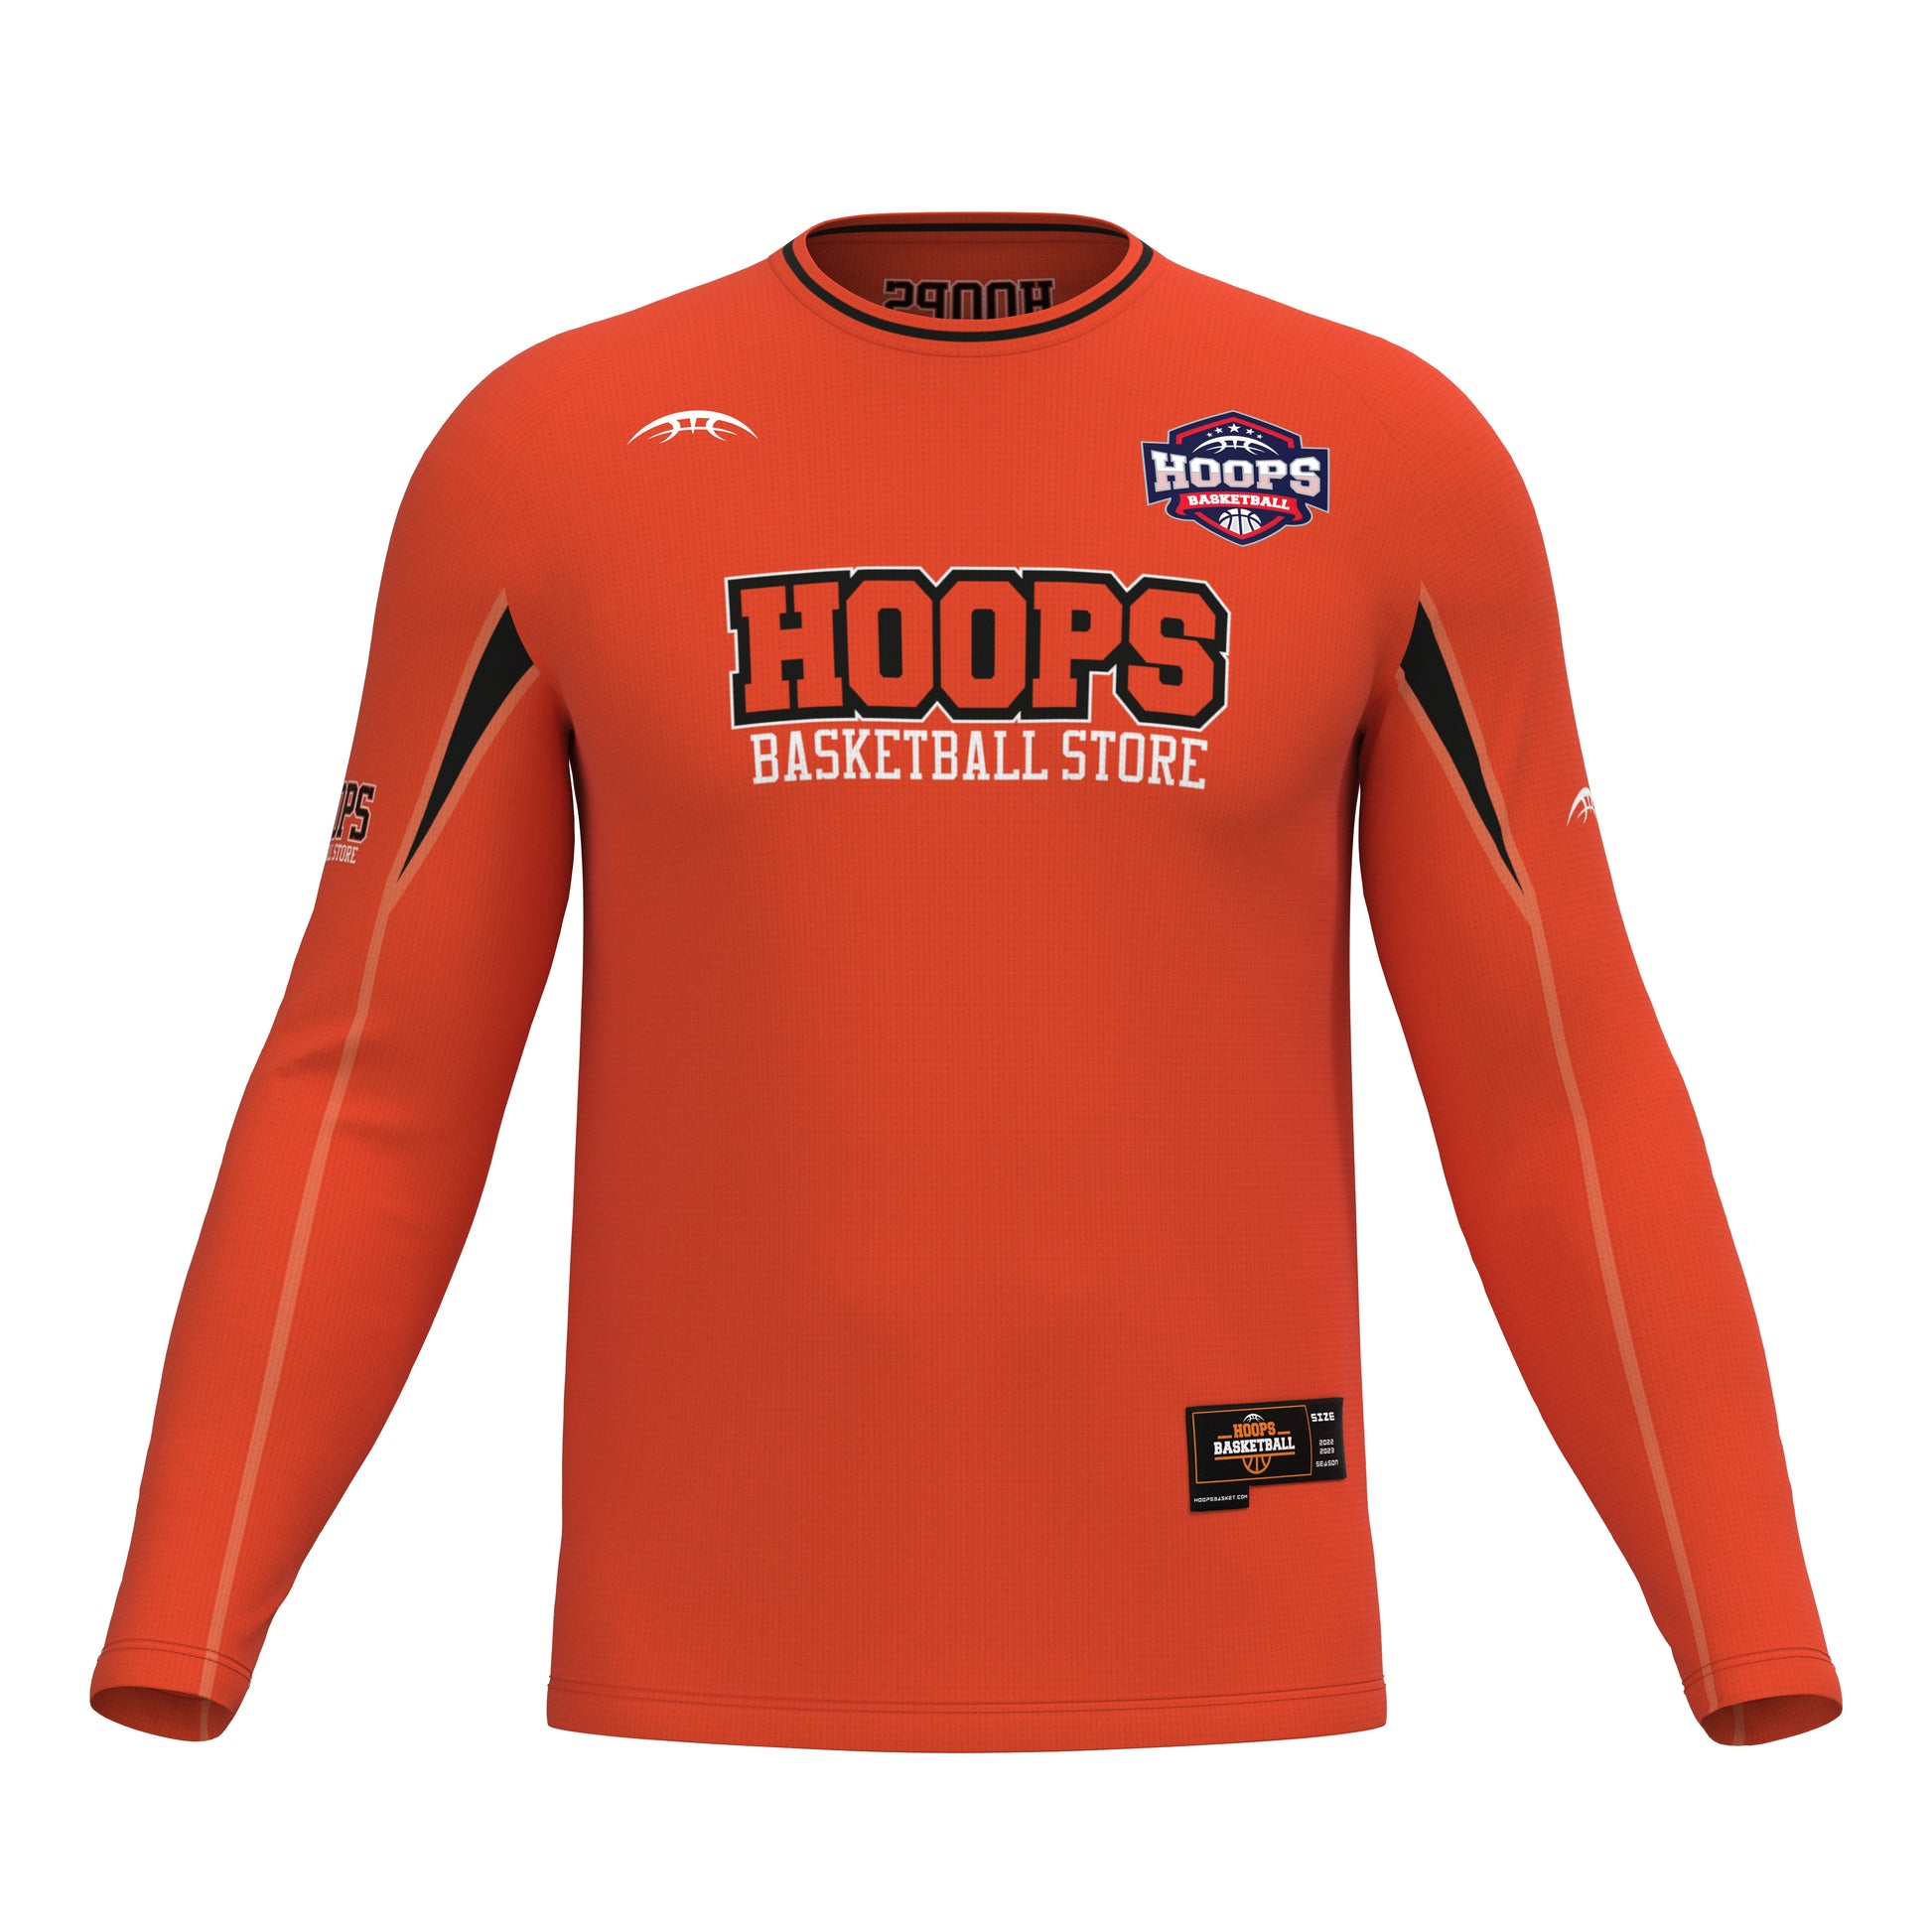 Custom Digital Print Basketball Warm-Up Shirt - 1012 XL